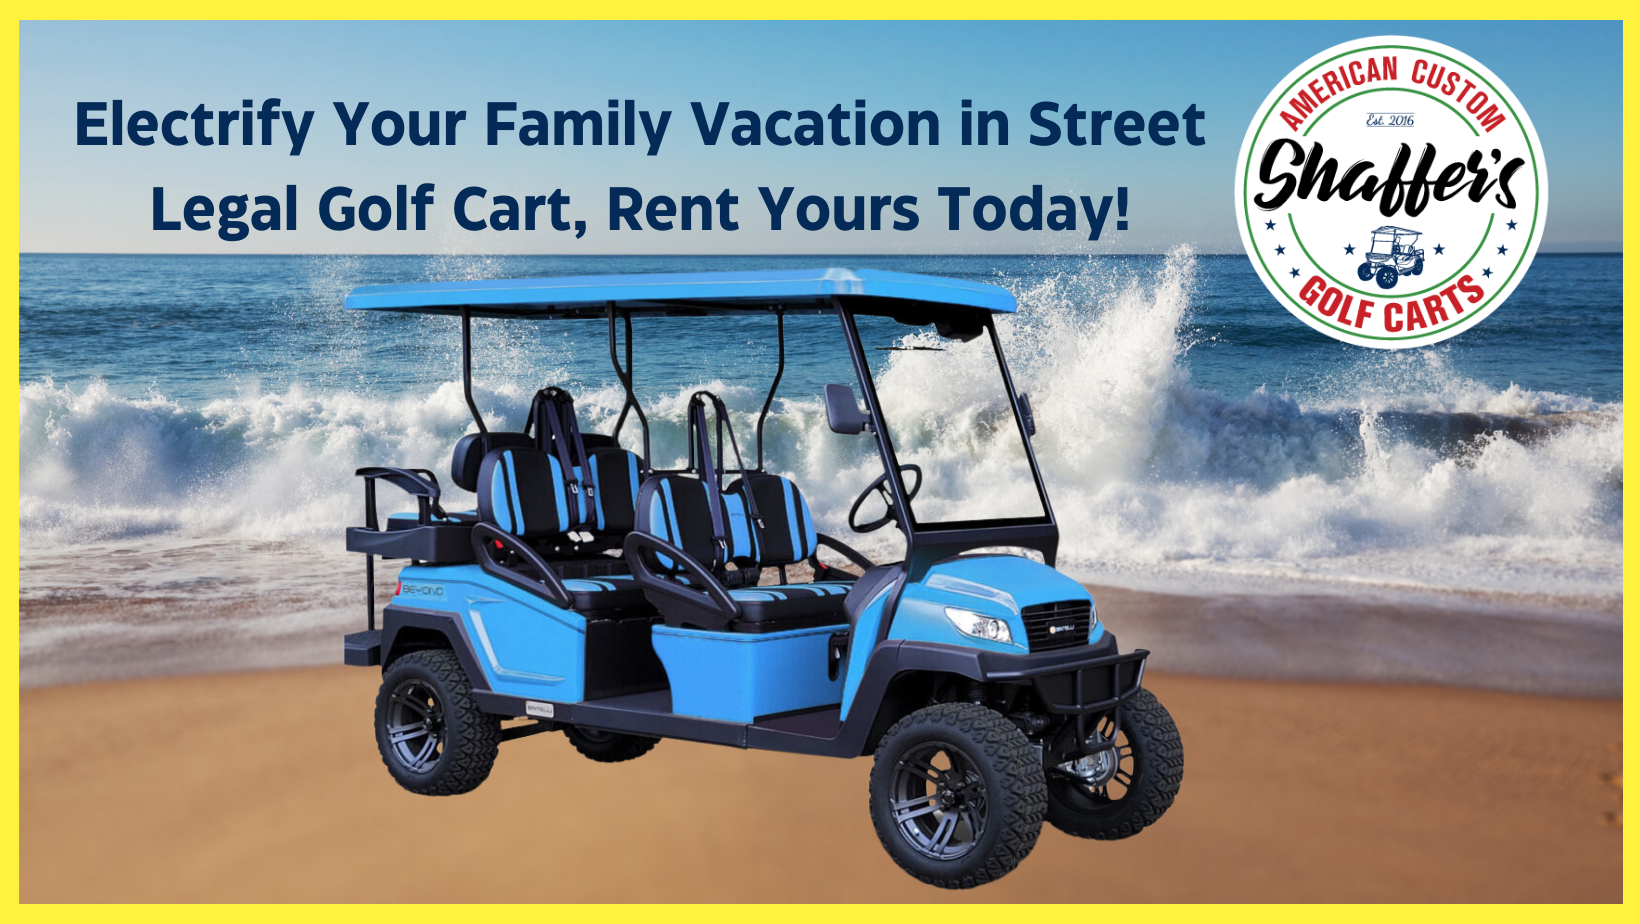 Shaffer's American Custom Golf Carts in Palm Harbor